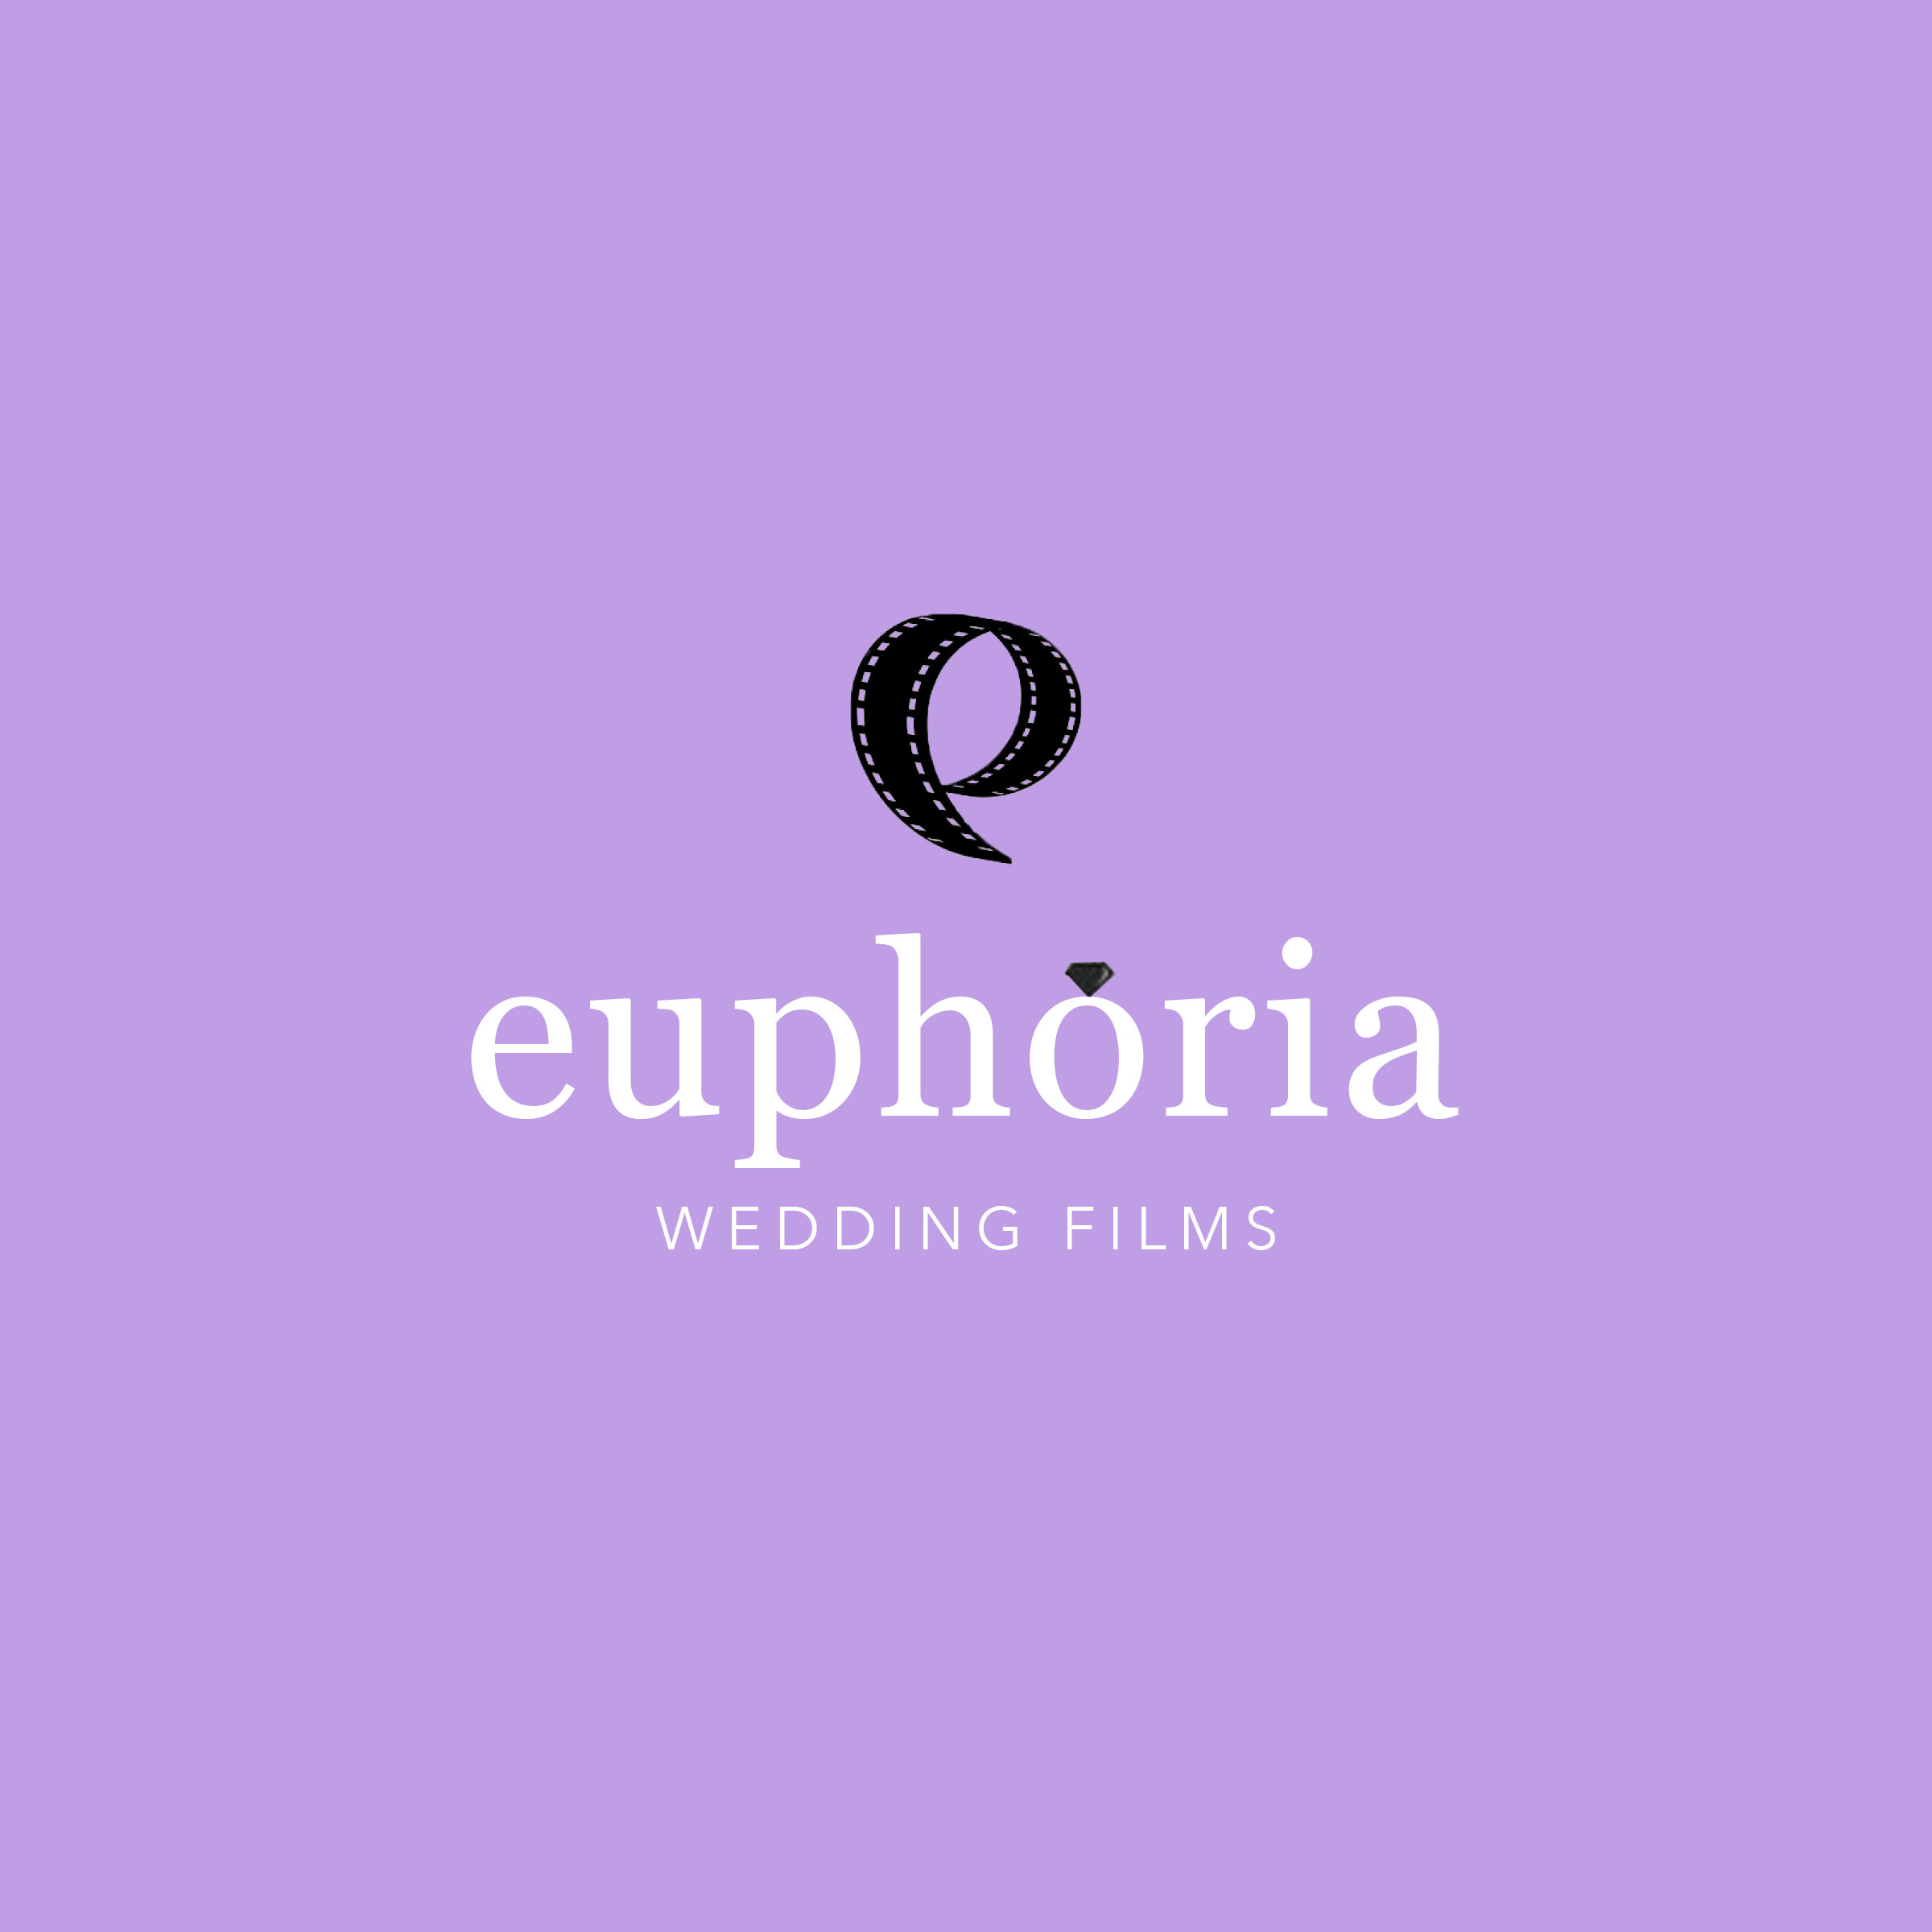 euphoria wedding films.jpg